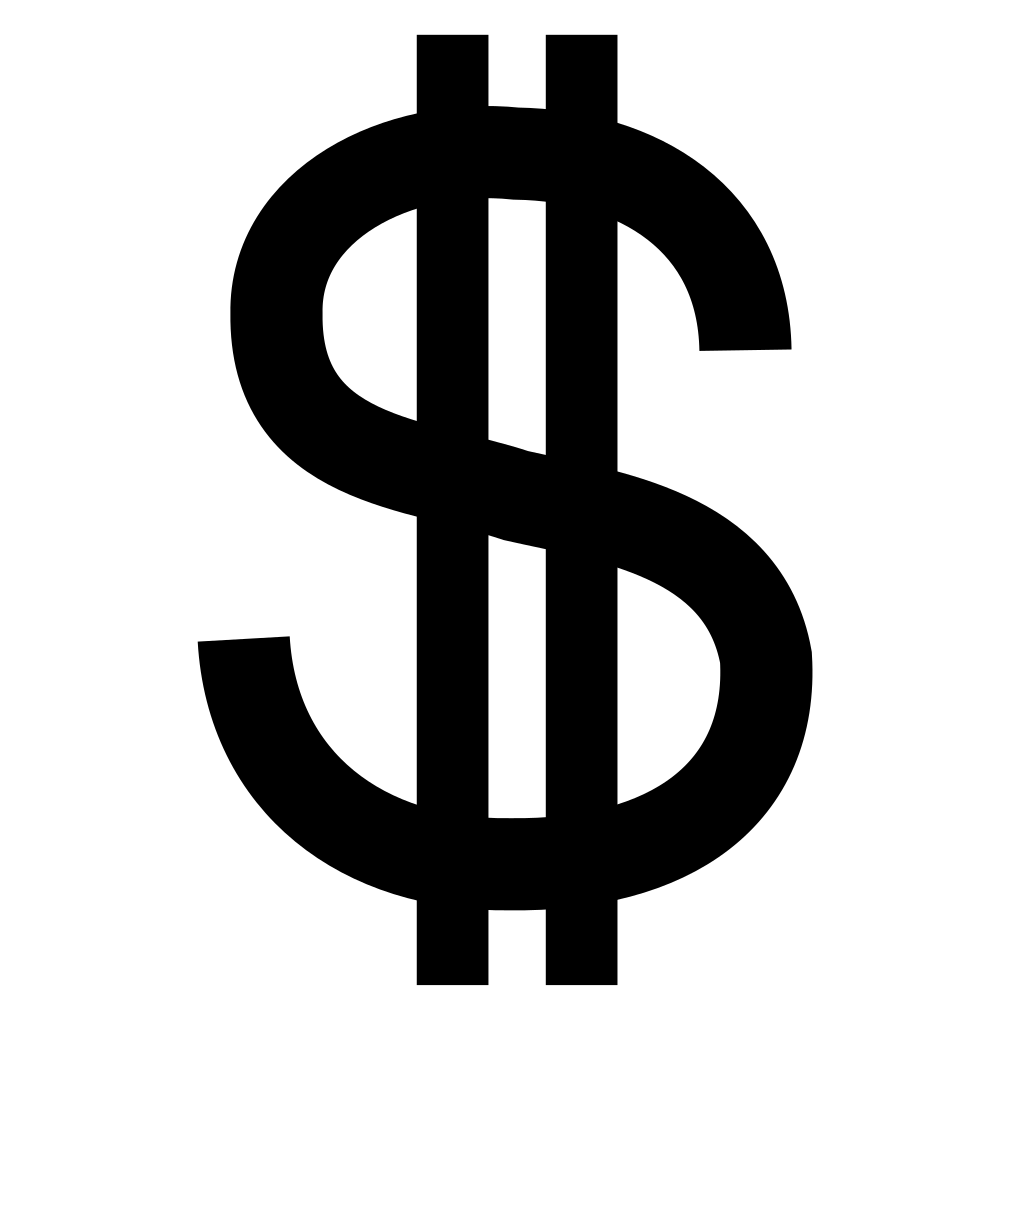 Download File:Cifrão symbol.svg - Wikimedia Commons